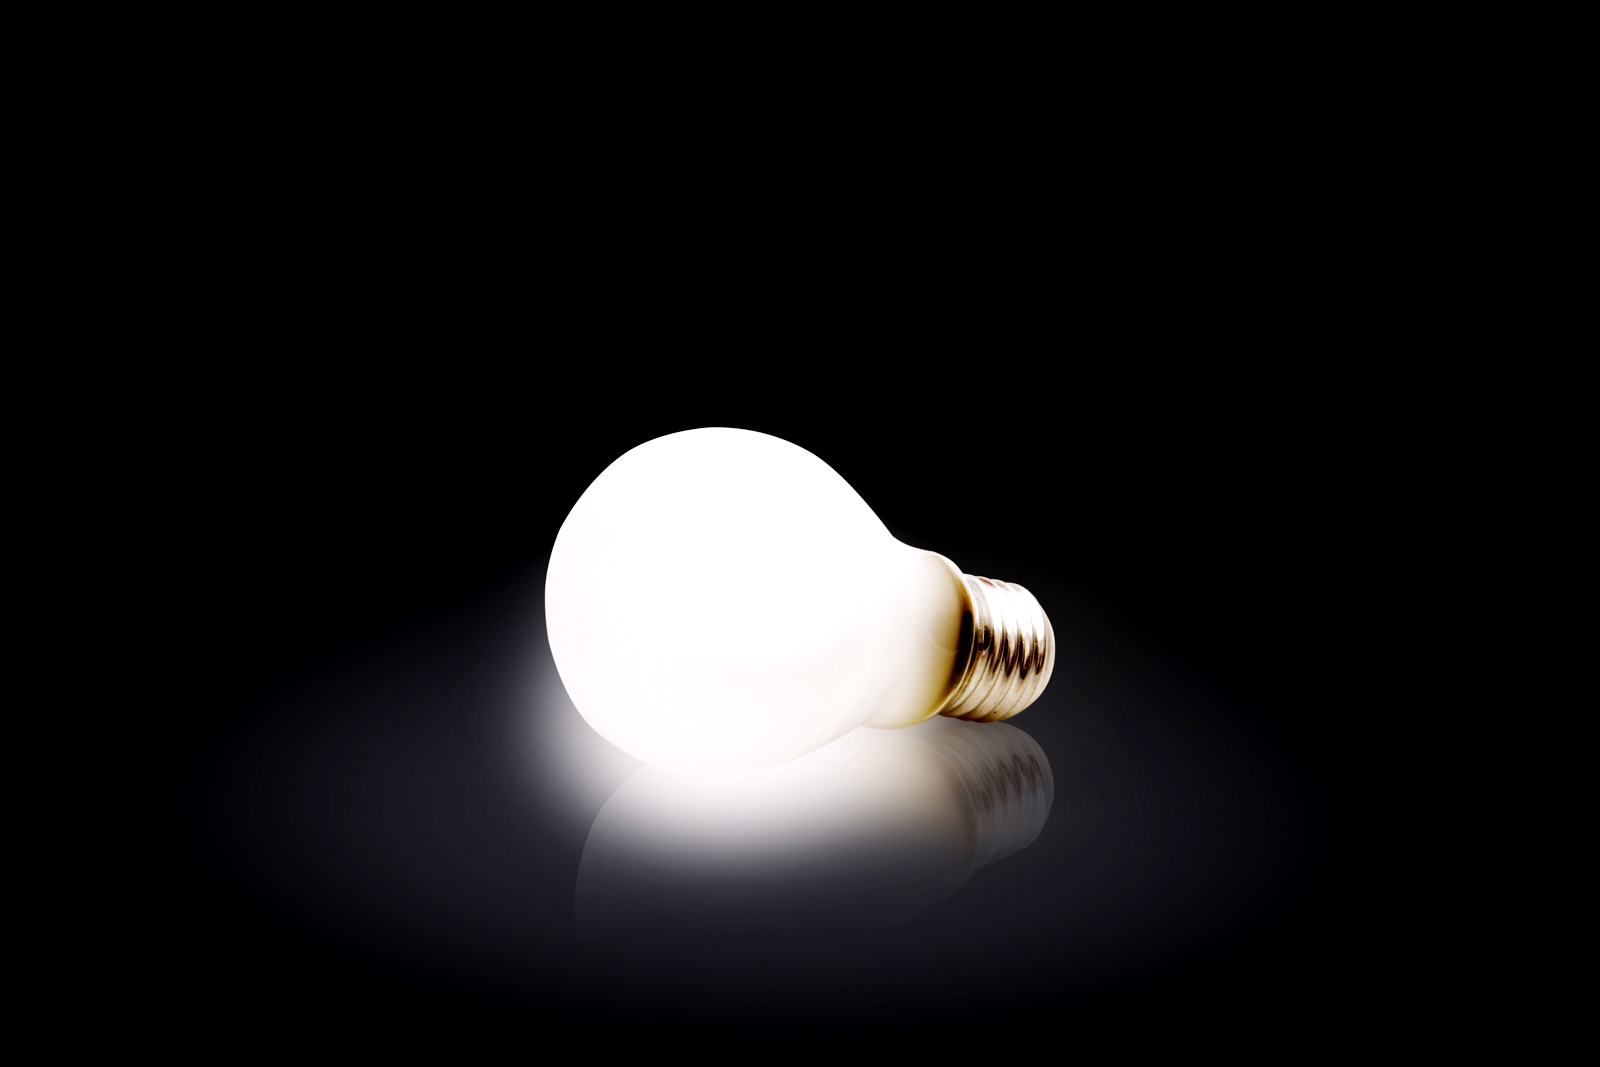 light wallpaper hd,lighting,light,incandescent light bulb,light bulb,light fixture